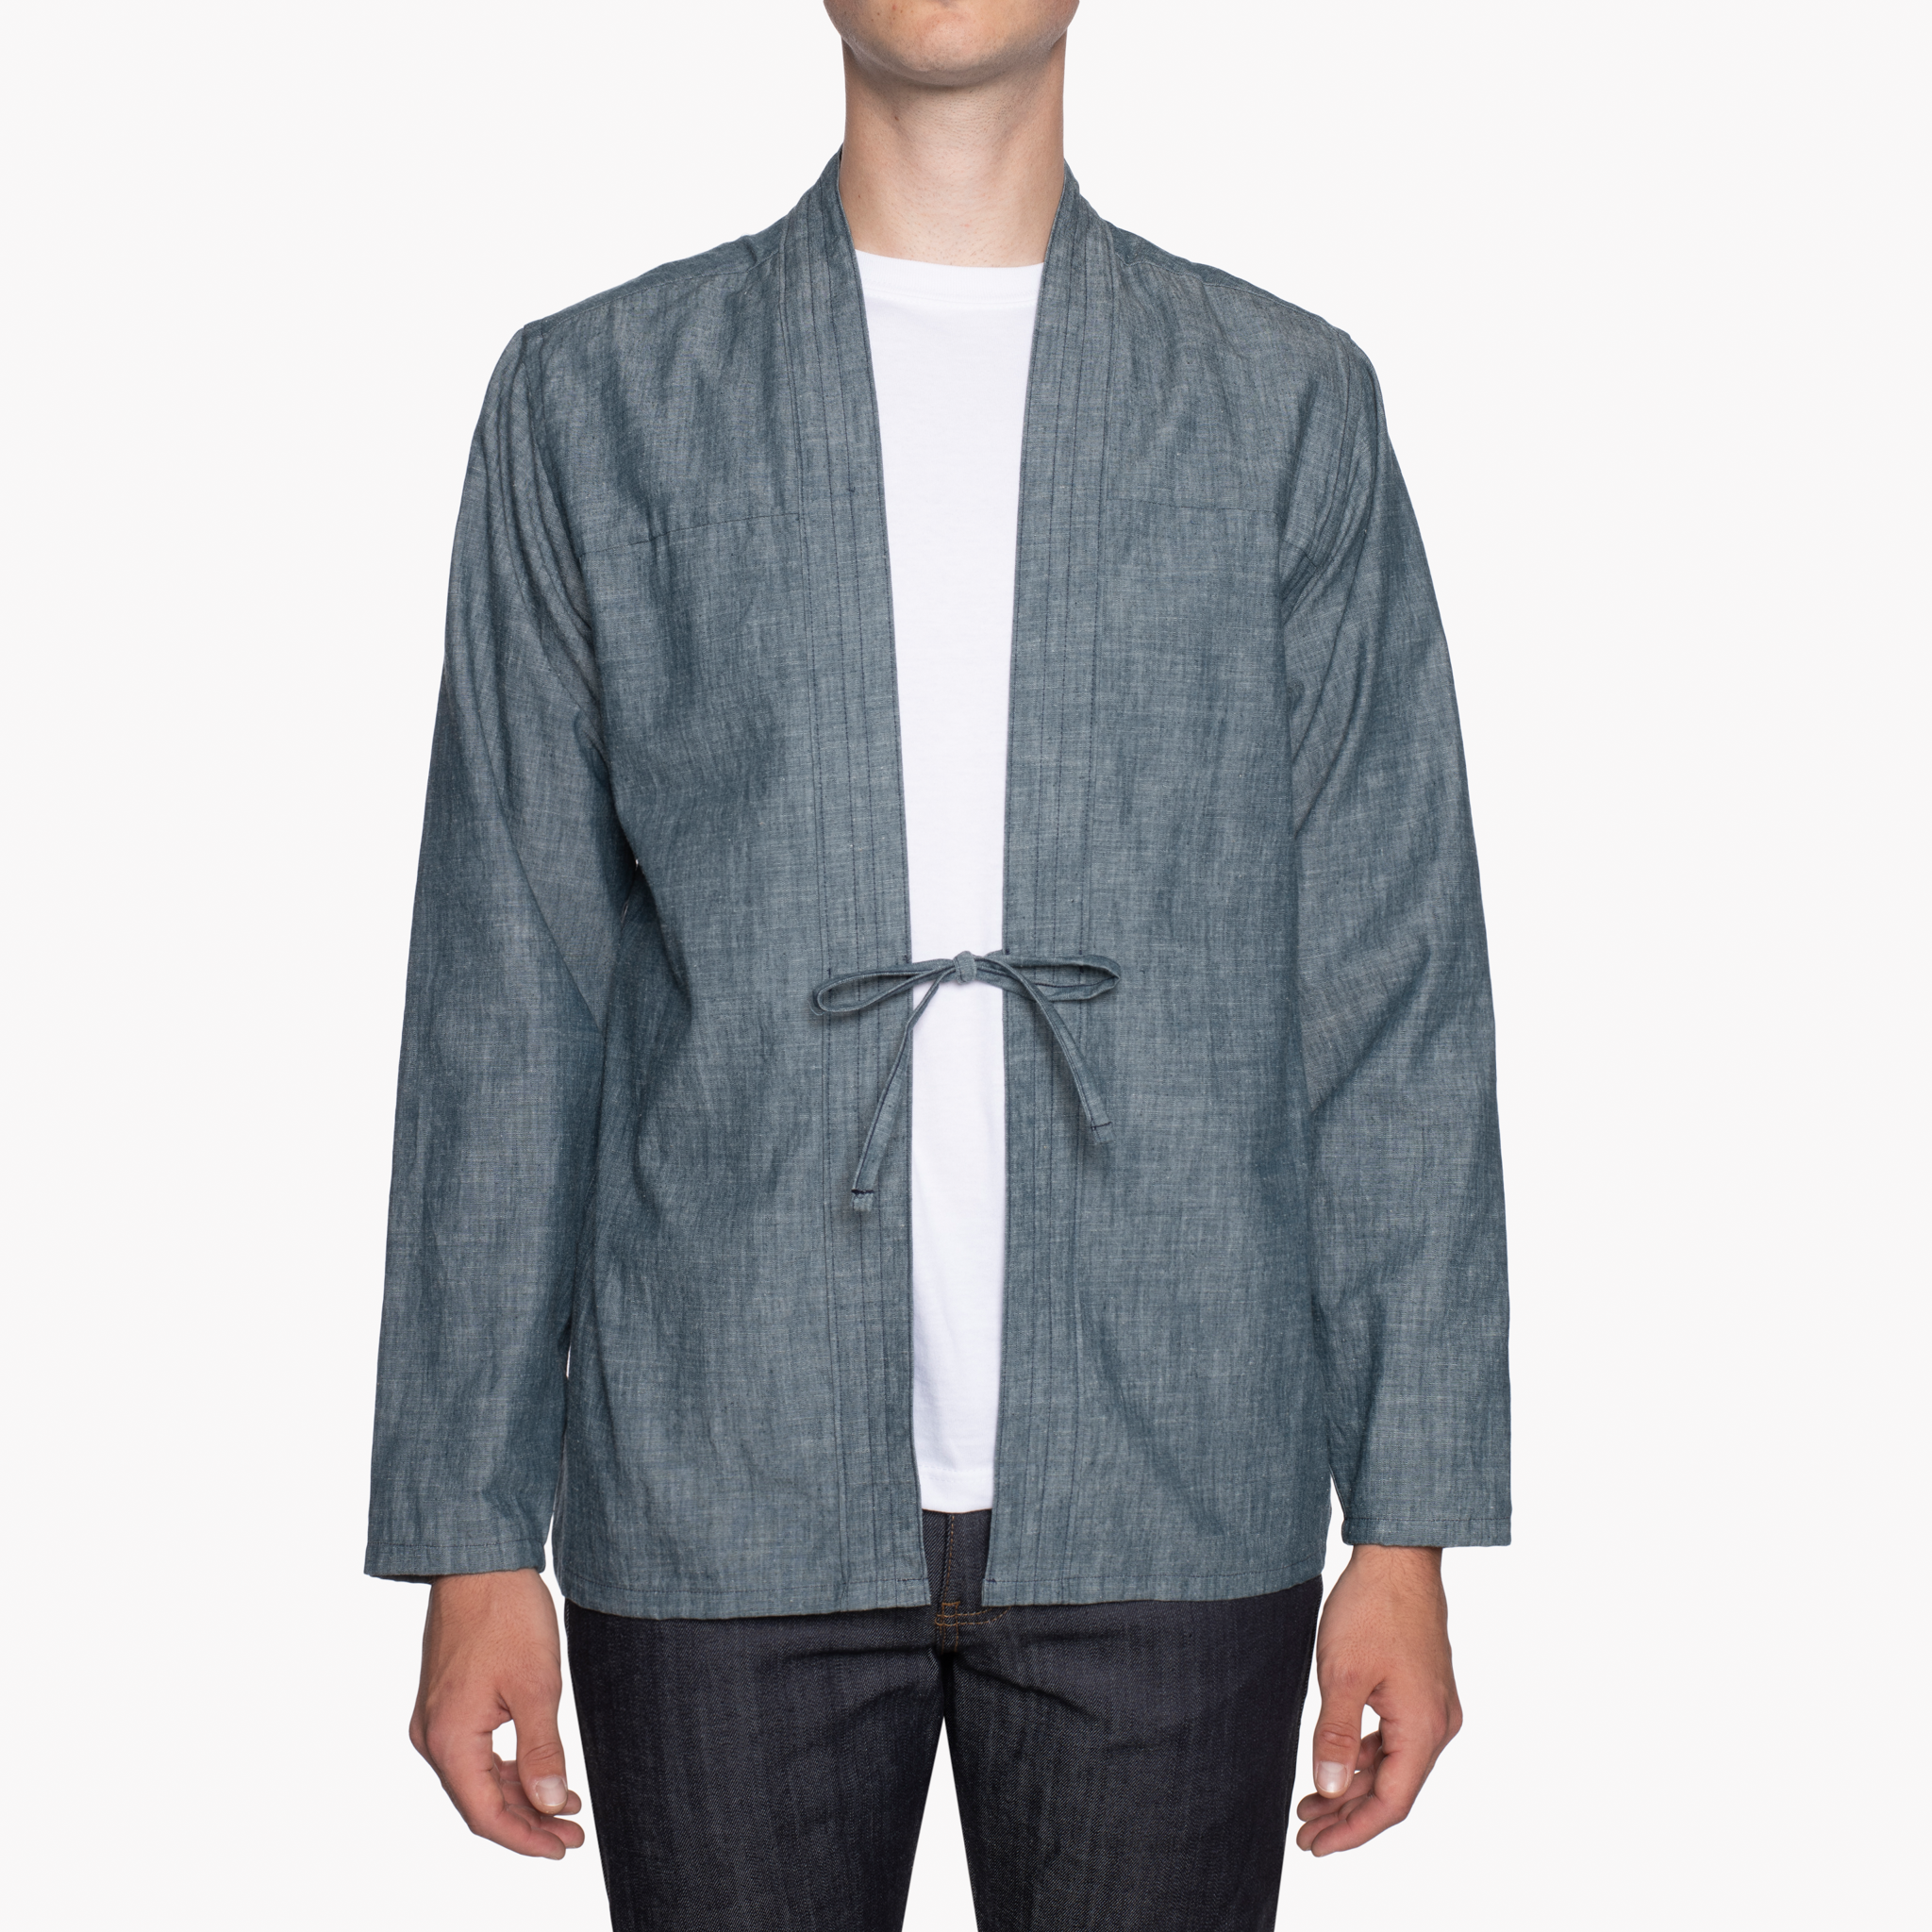  Kimono Shirt - 5oz Rinsed Chambray - front 